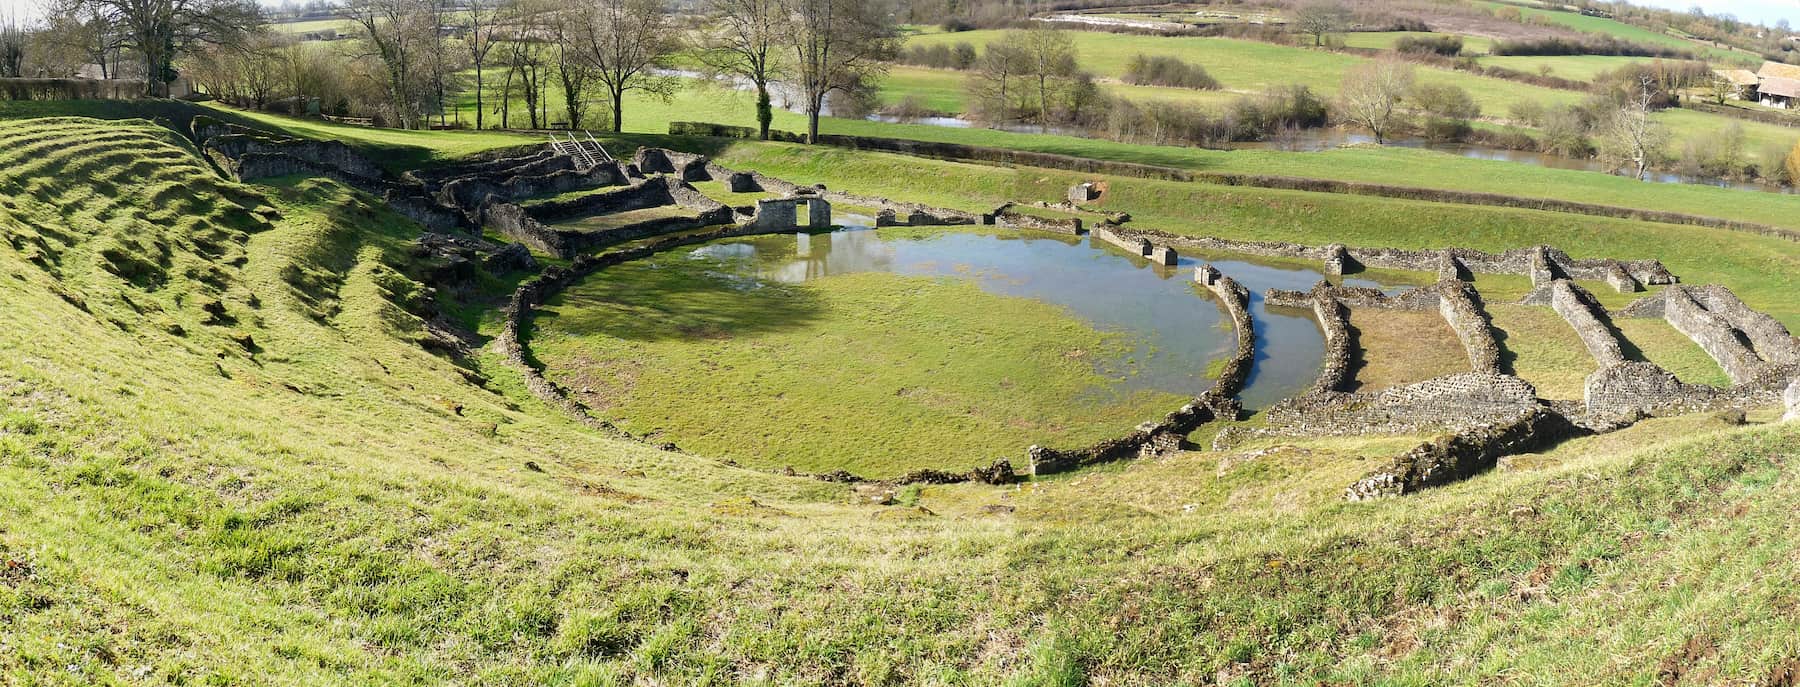 Site gallo-romain de Sanxay dans le Poitou